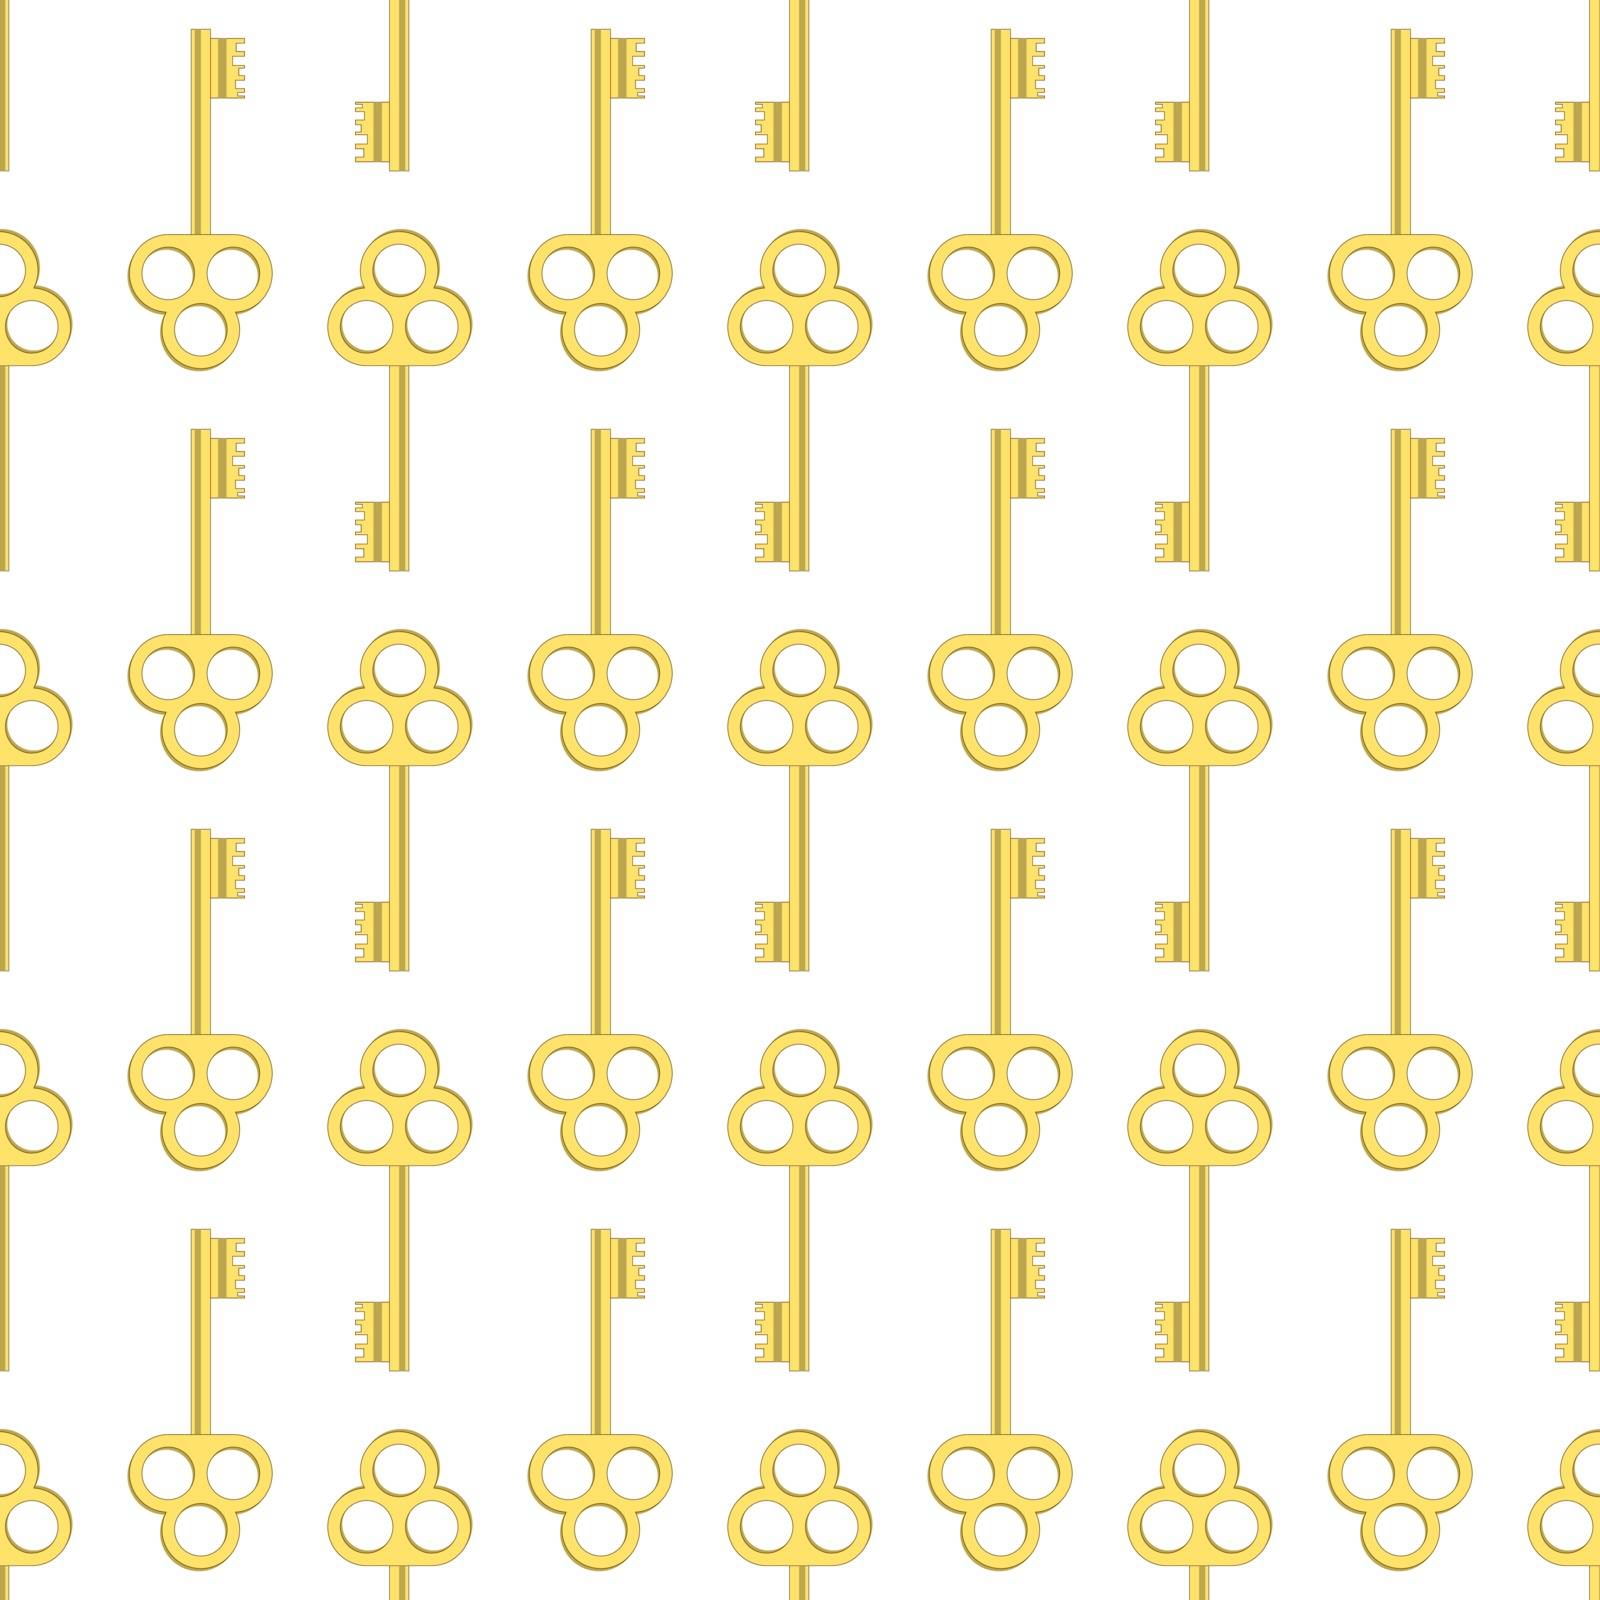 Yellow Keys Isolated on White Background. Seamless Gold Key Pattern